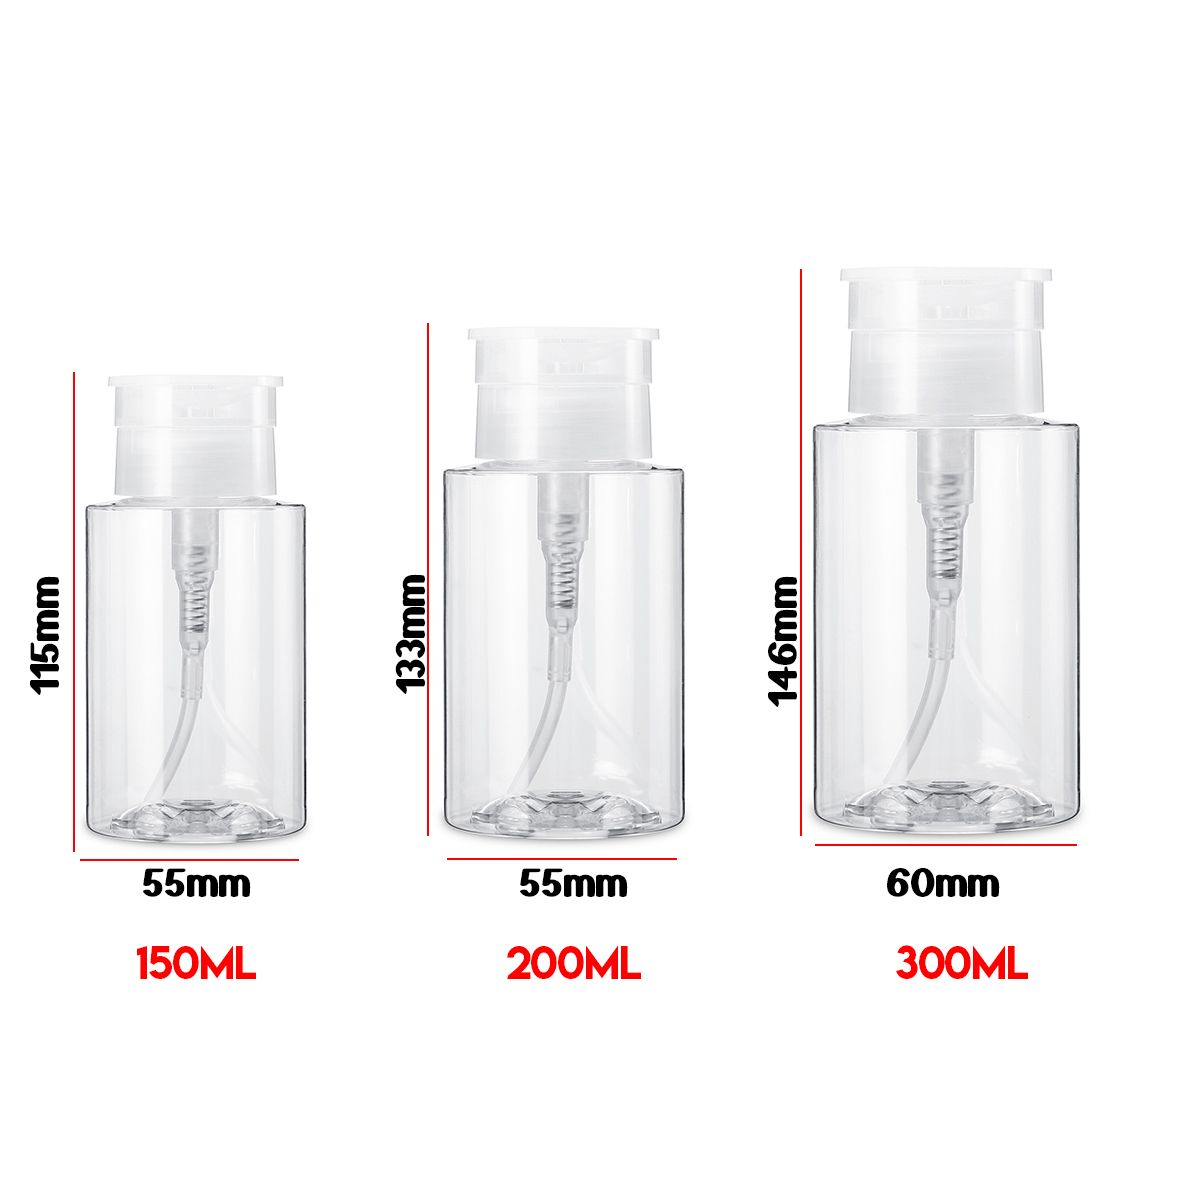 150200300ml-Portable-Nail-Art-Polish-Makeup-Remover-Plastic-Press-Pump-Dispenser-Bottle-Press-Pump-E-1573784